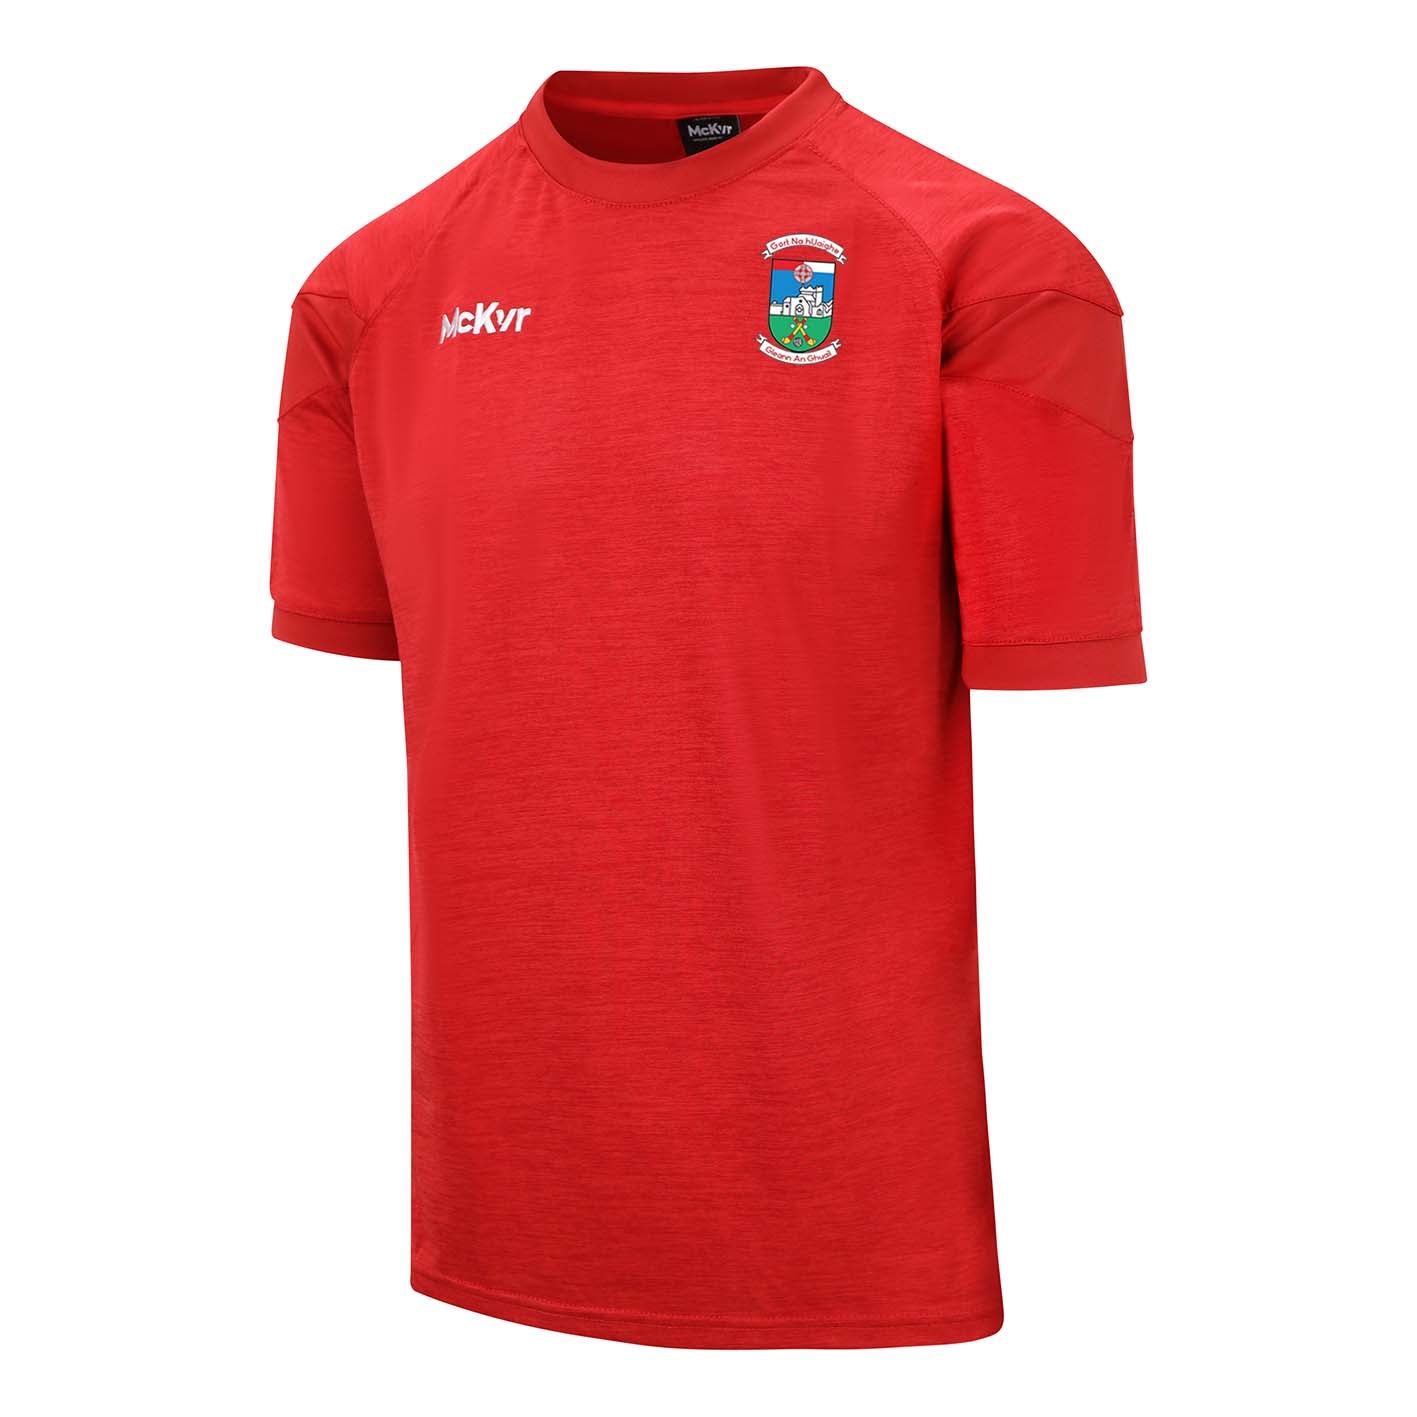 Mc Keever Gortnahoe Glengoole GAA Core 22 T-Shirt - Youth - Red